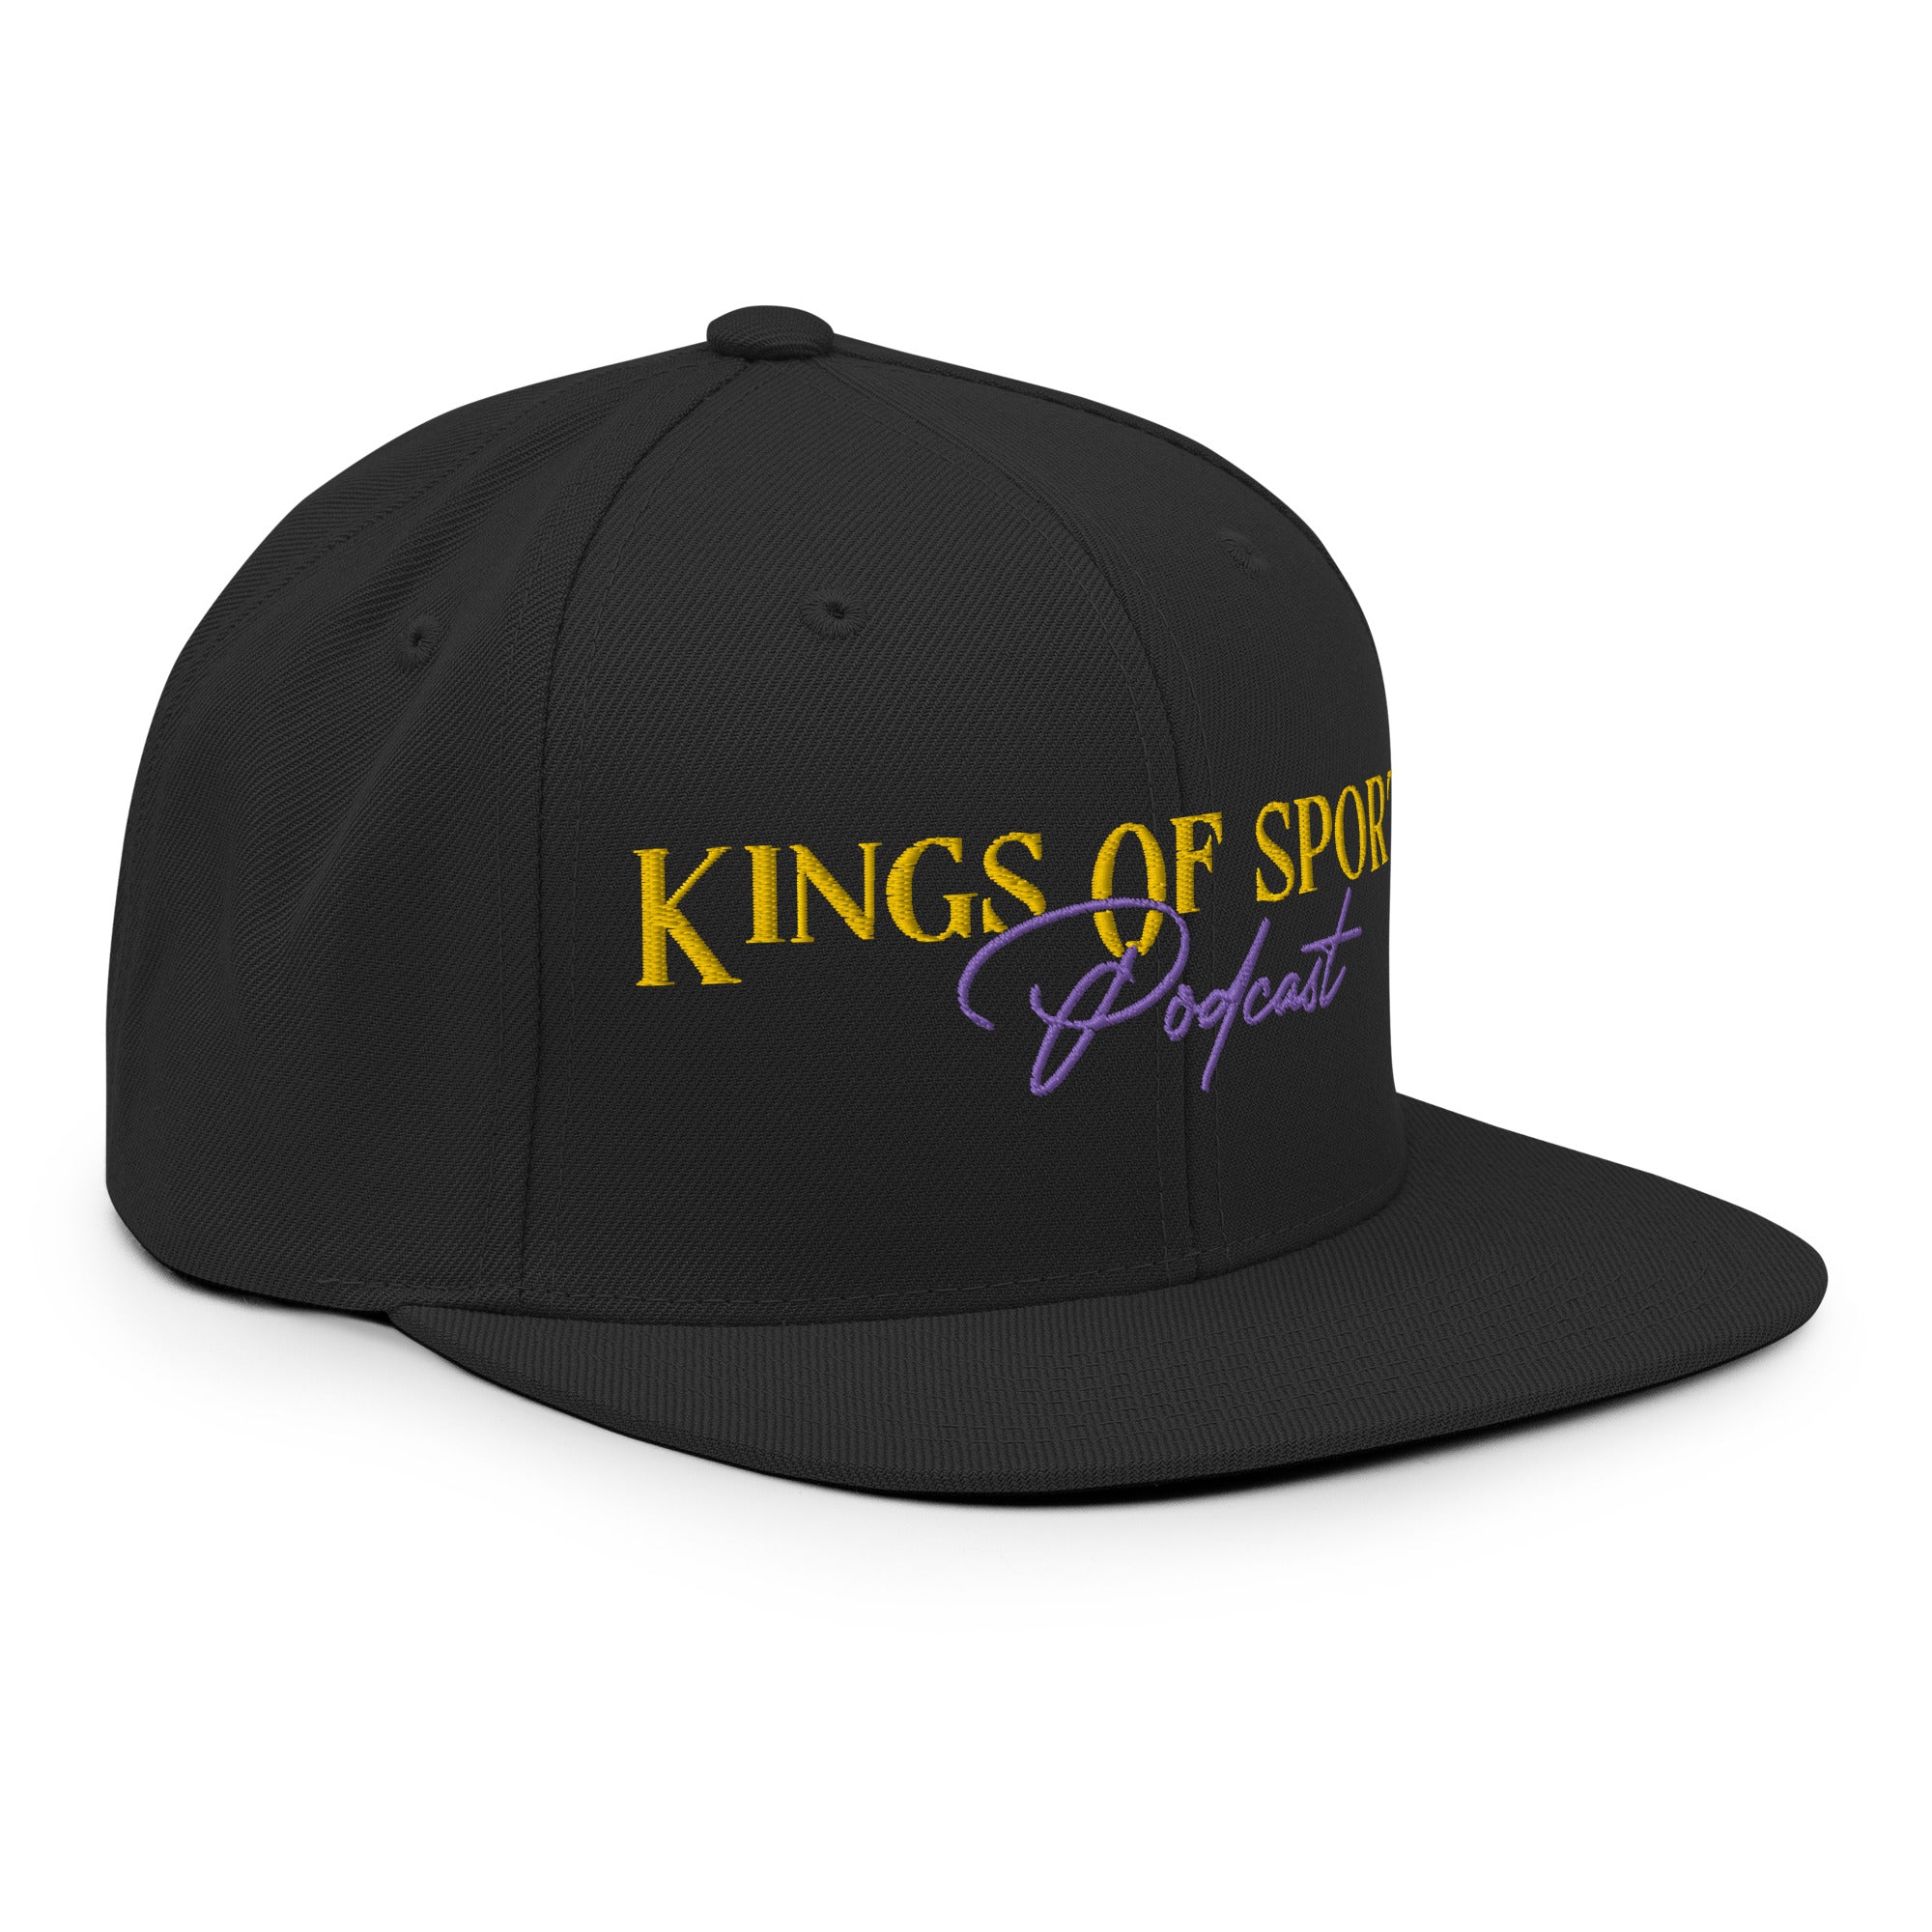 Kings of Sport Podcast Black Snapback